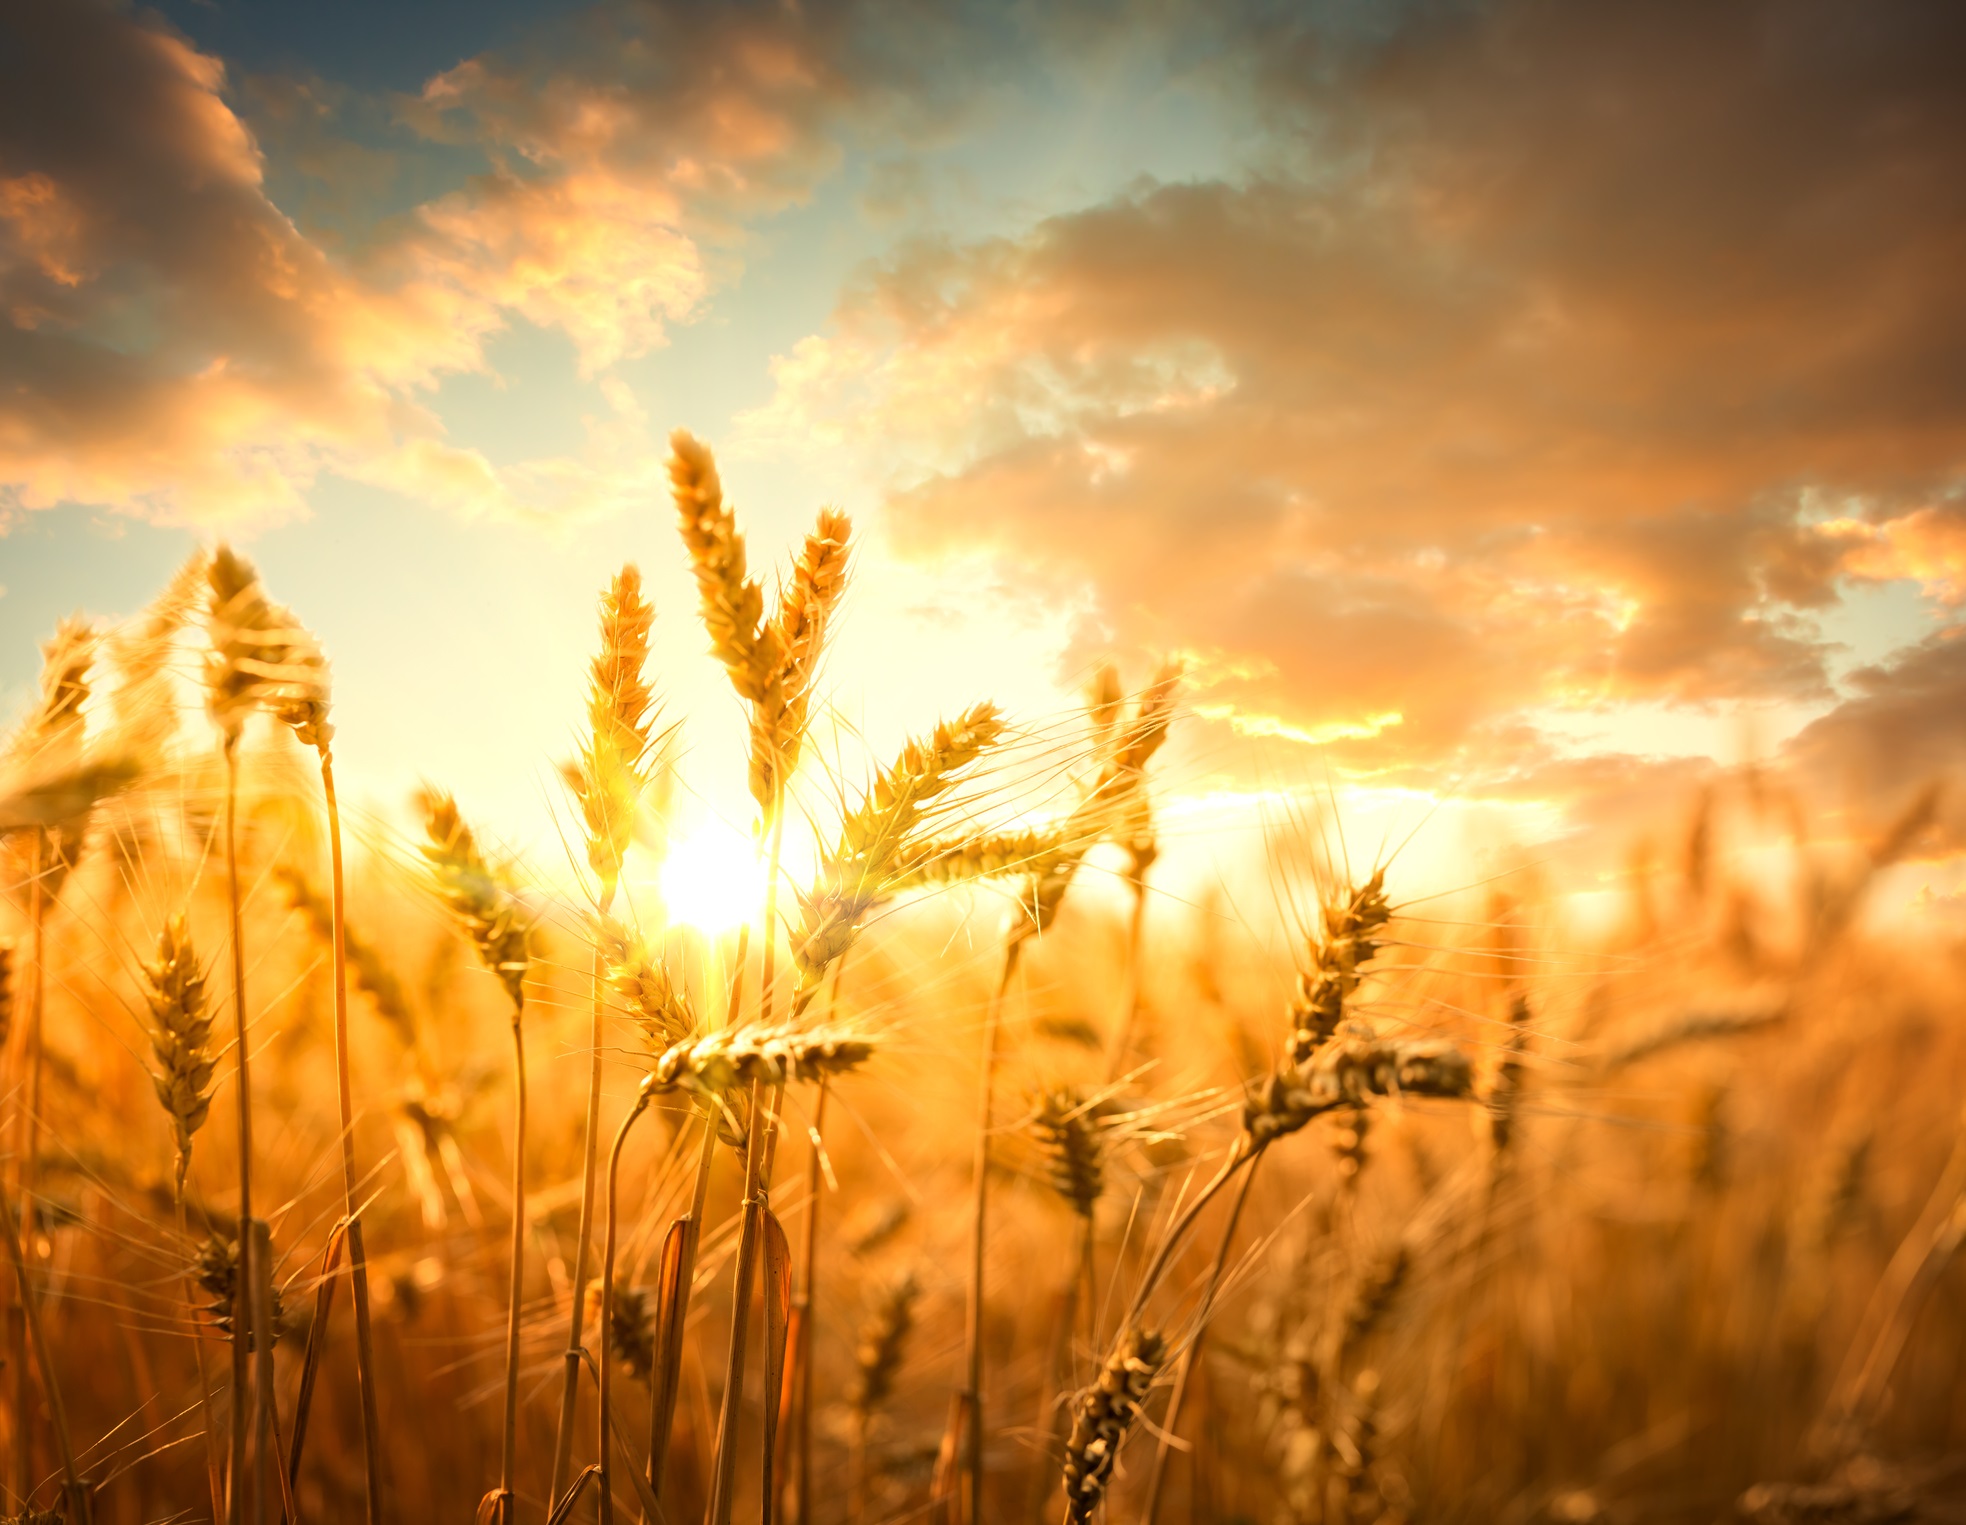 Wheat against sunset